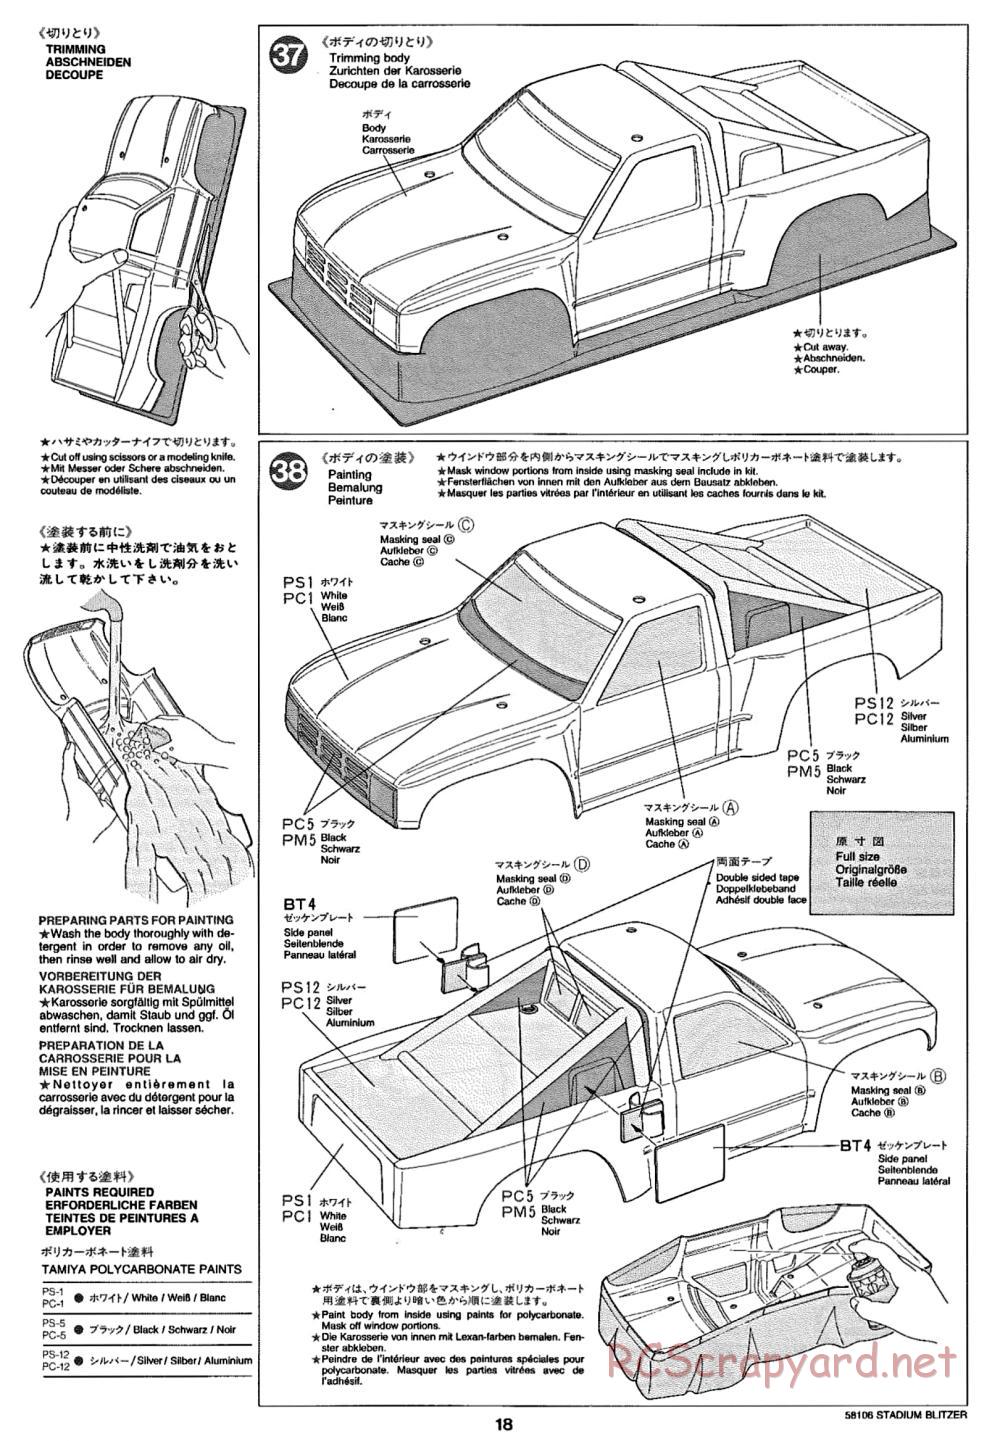 Tamiya - Stadium Blitzer Chassis - Manual - Page 18